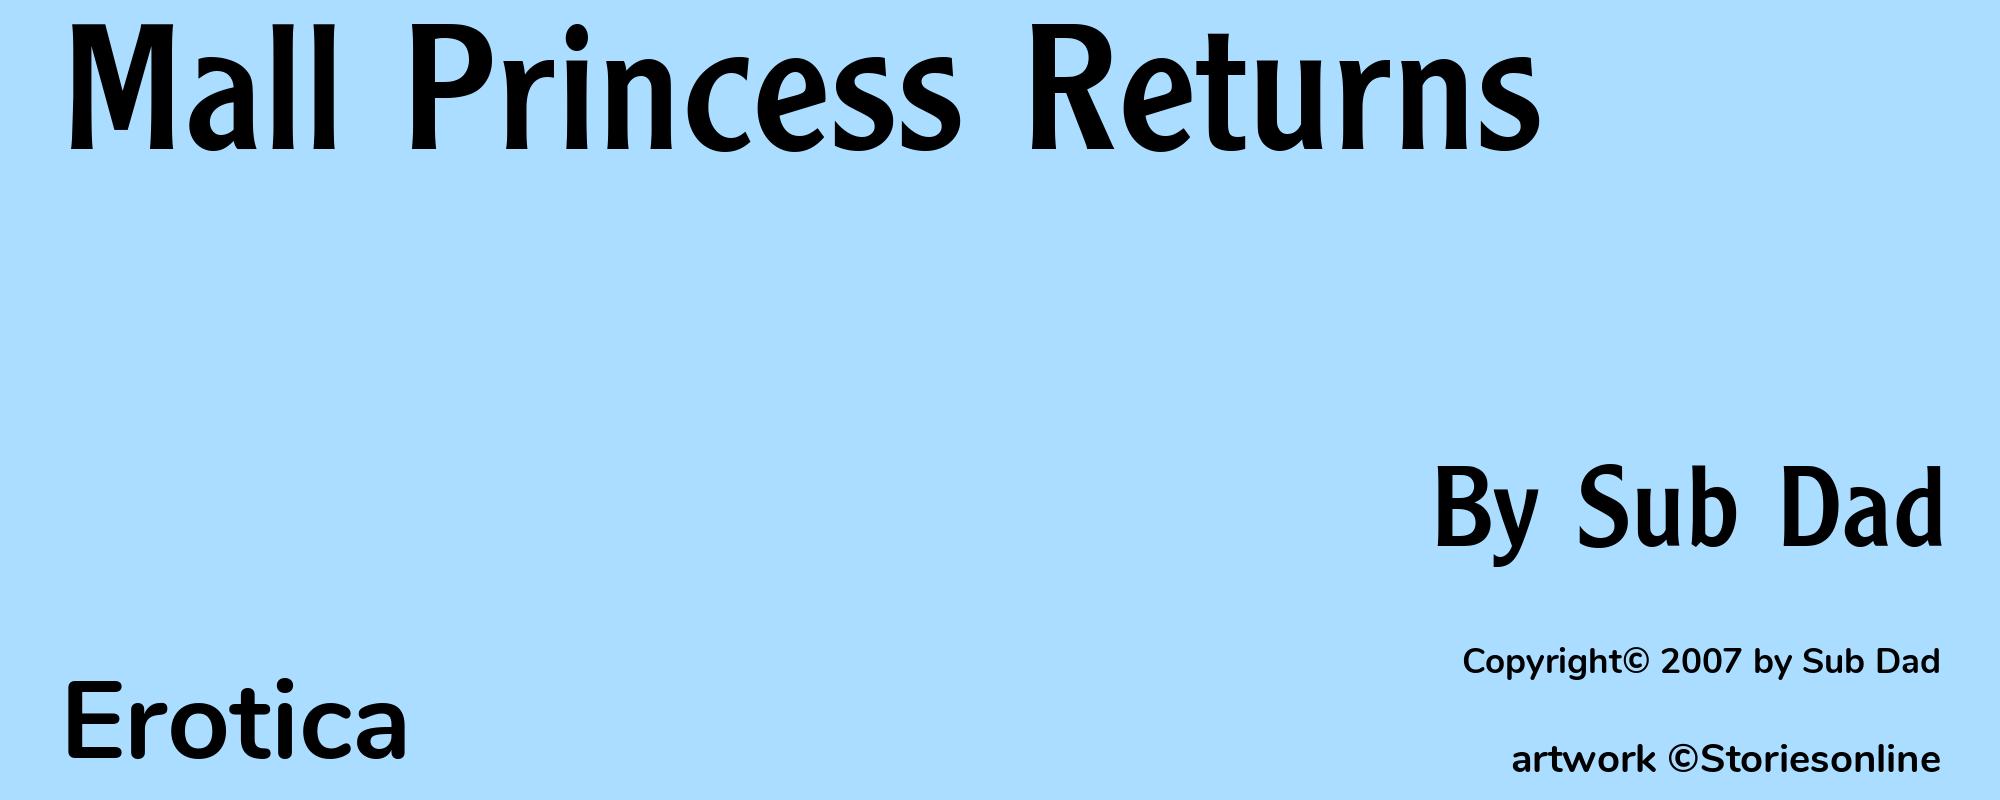 Mall Princess Returns - Cover